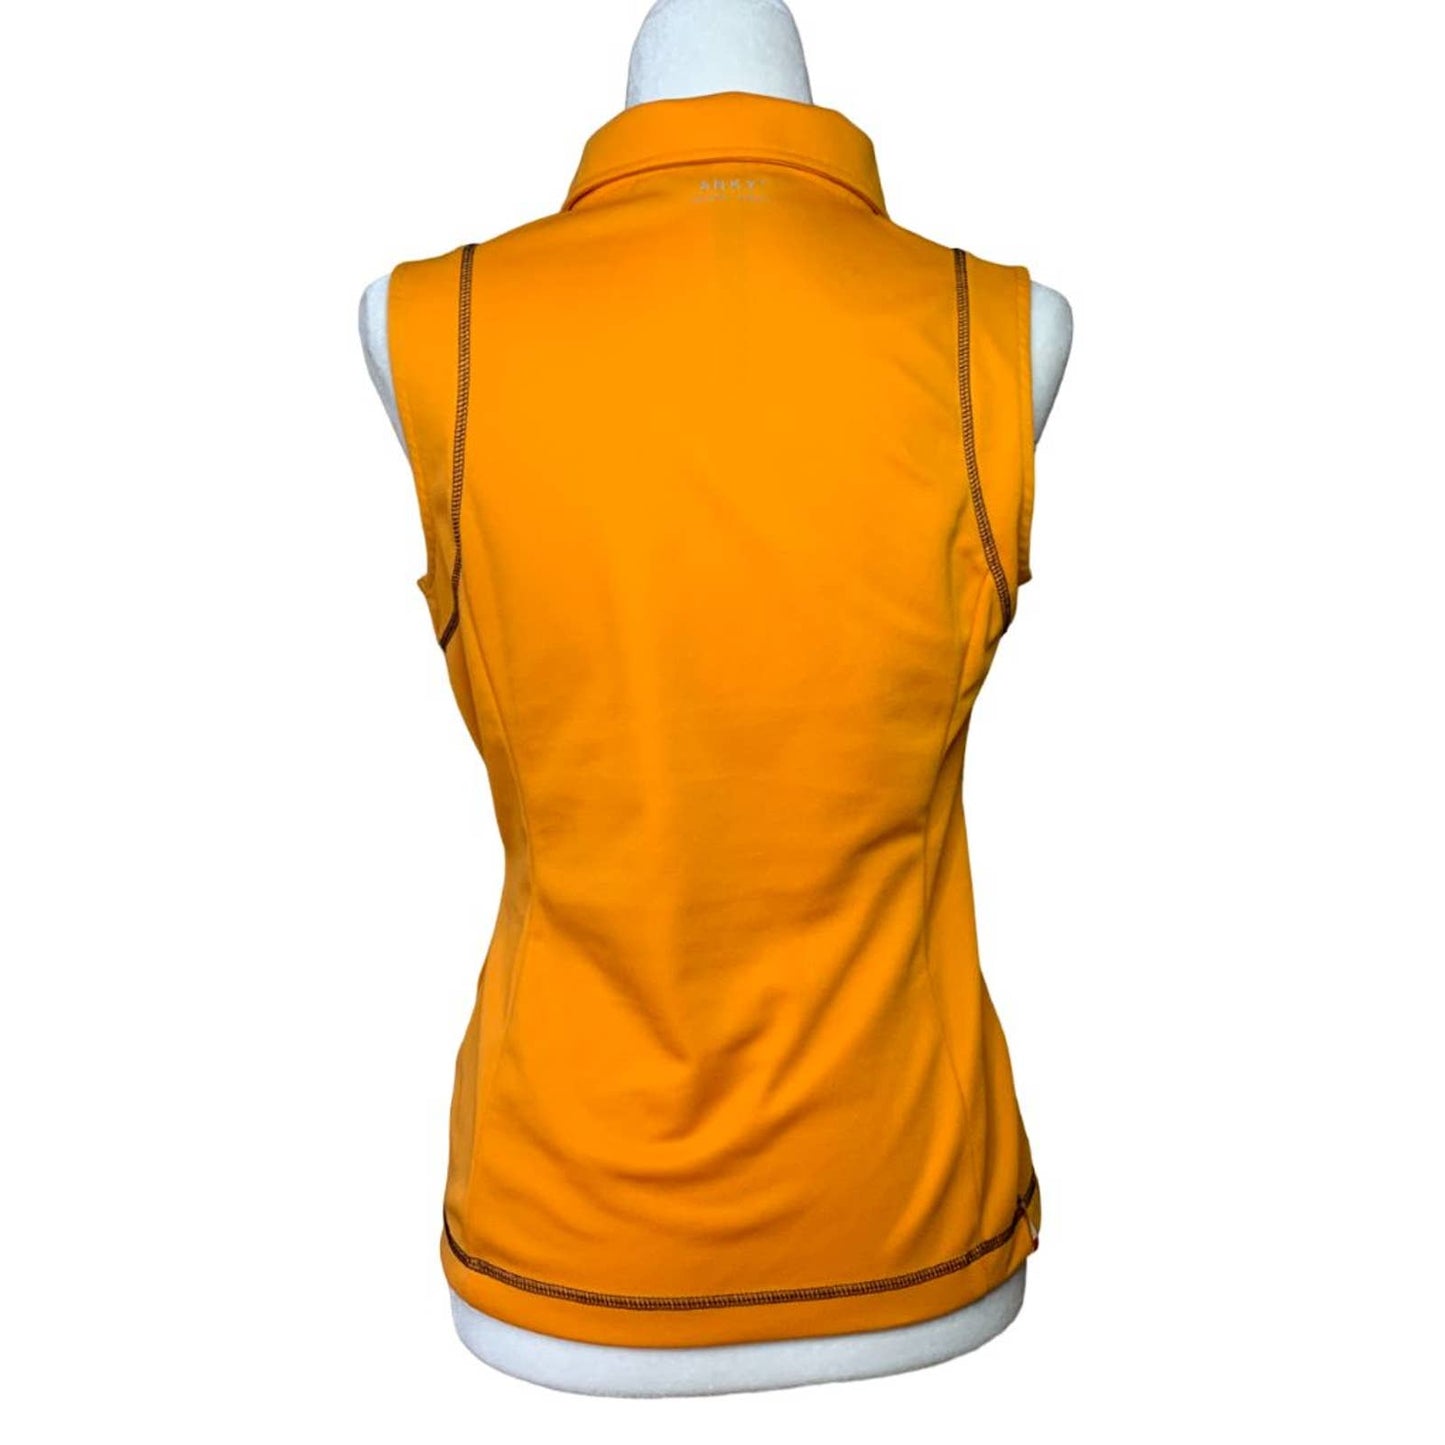 Anky Riding Shirt in Orange - Woman's 8